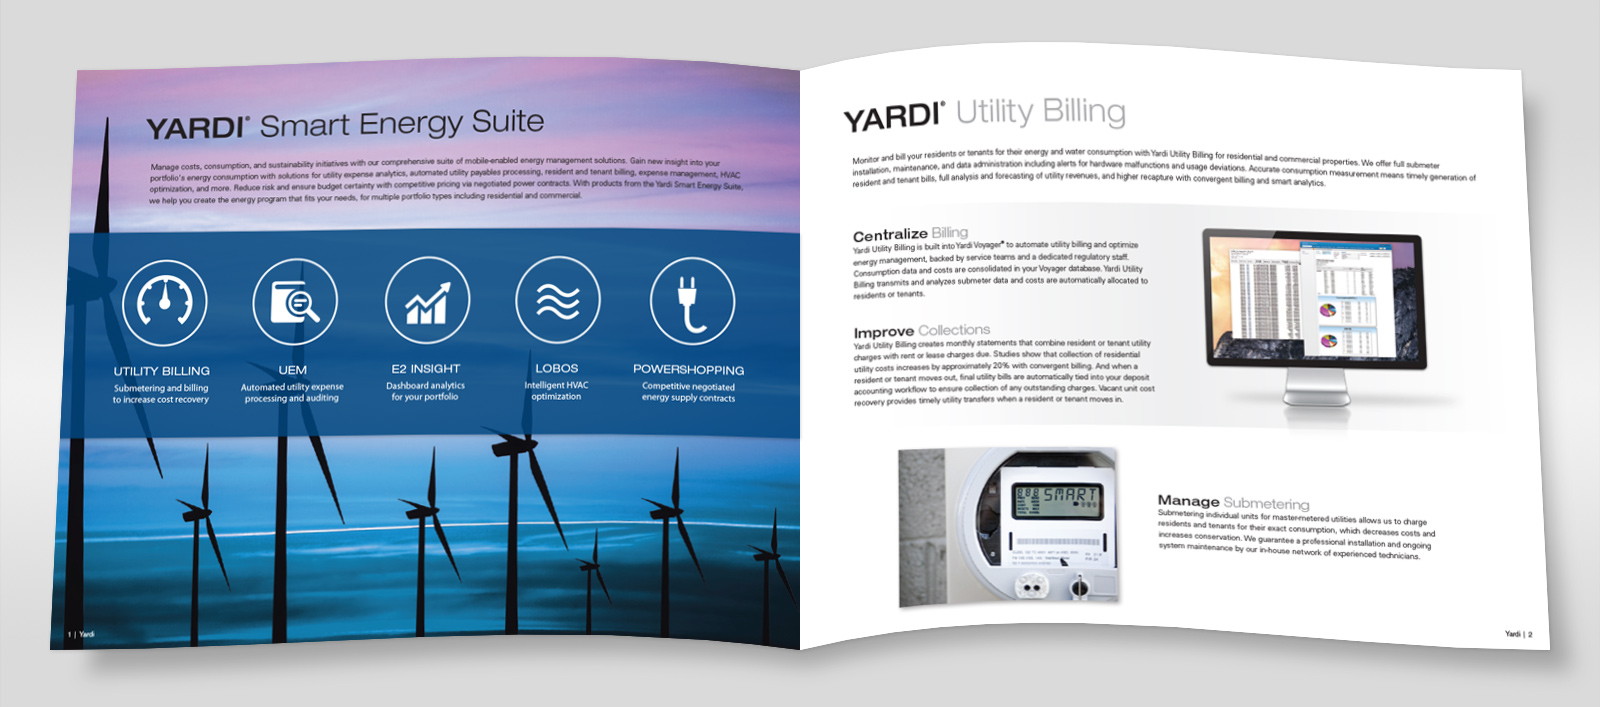 Yardi Smart Energy Suite brochure designed by Gabriel Nordyke creative professional